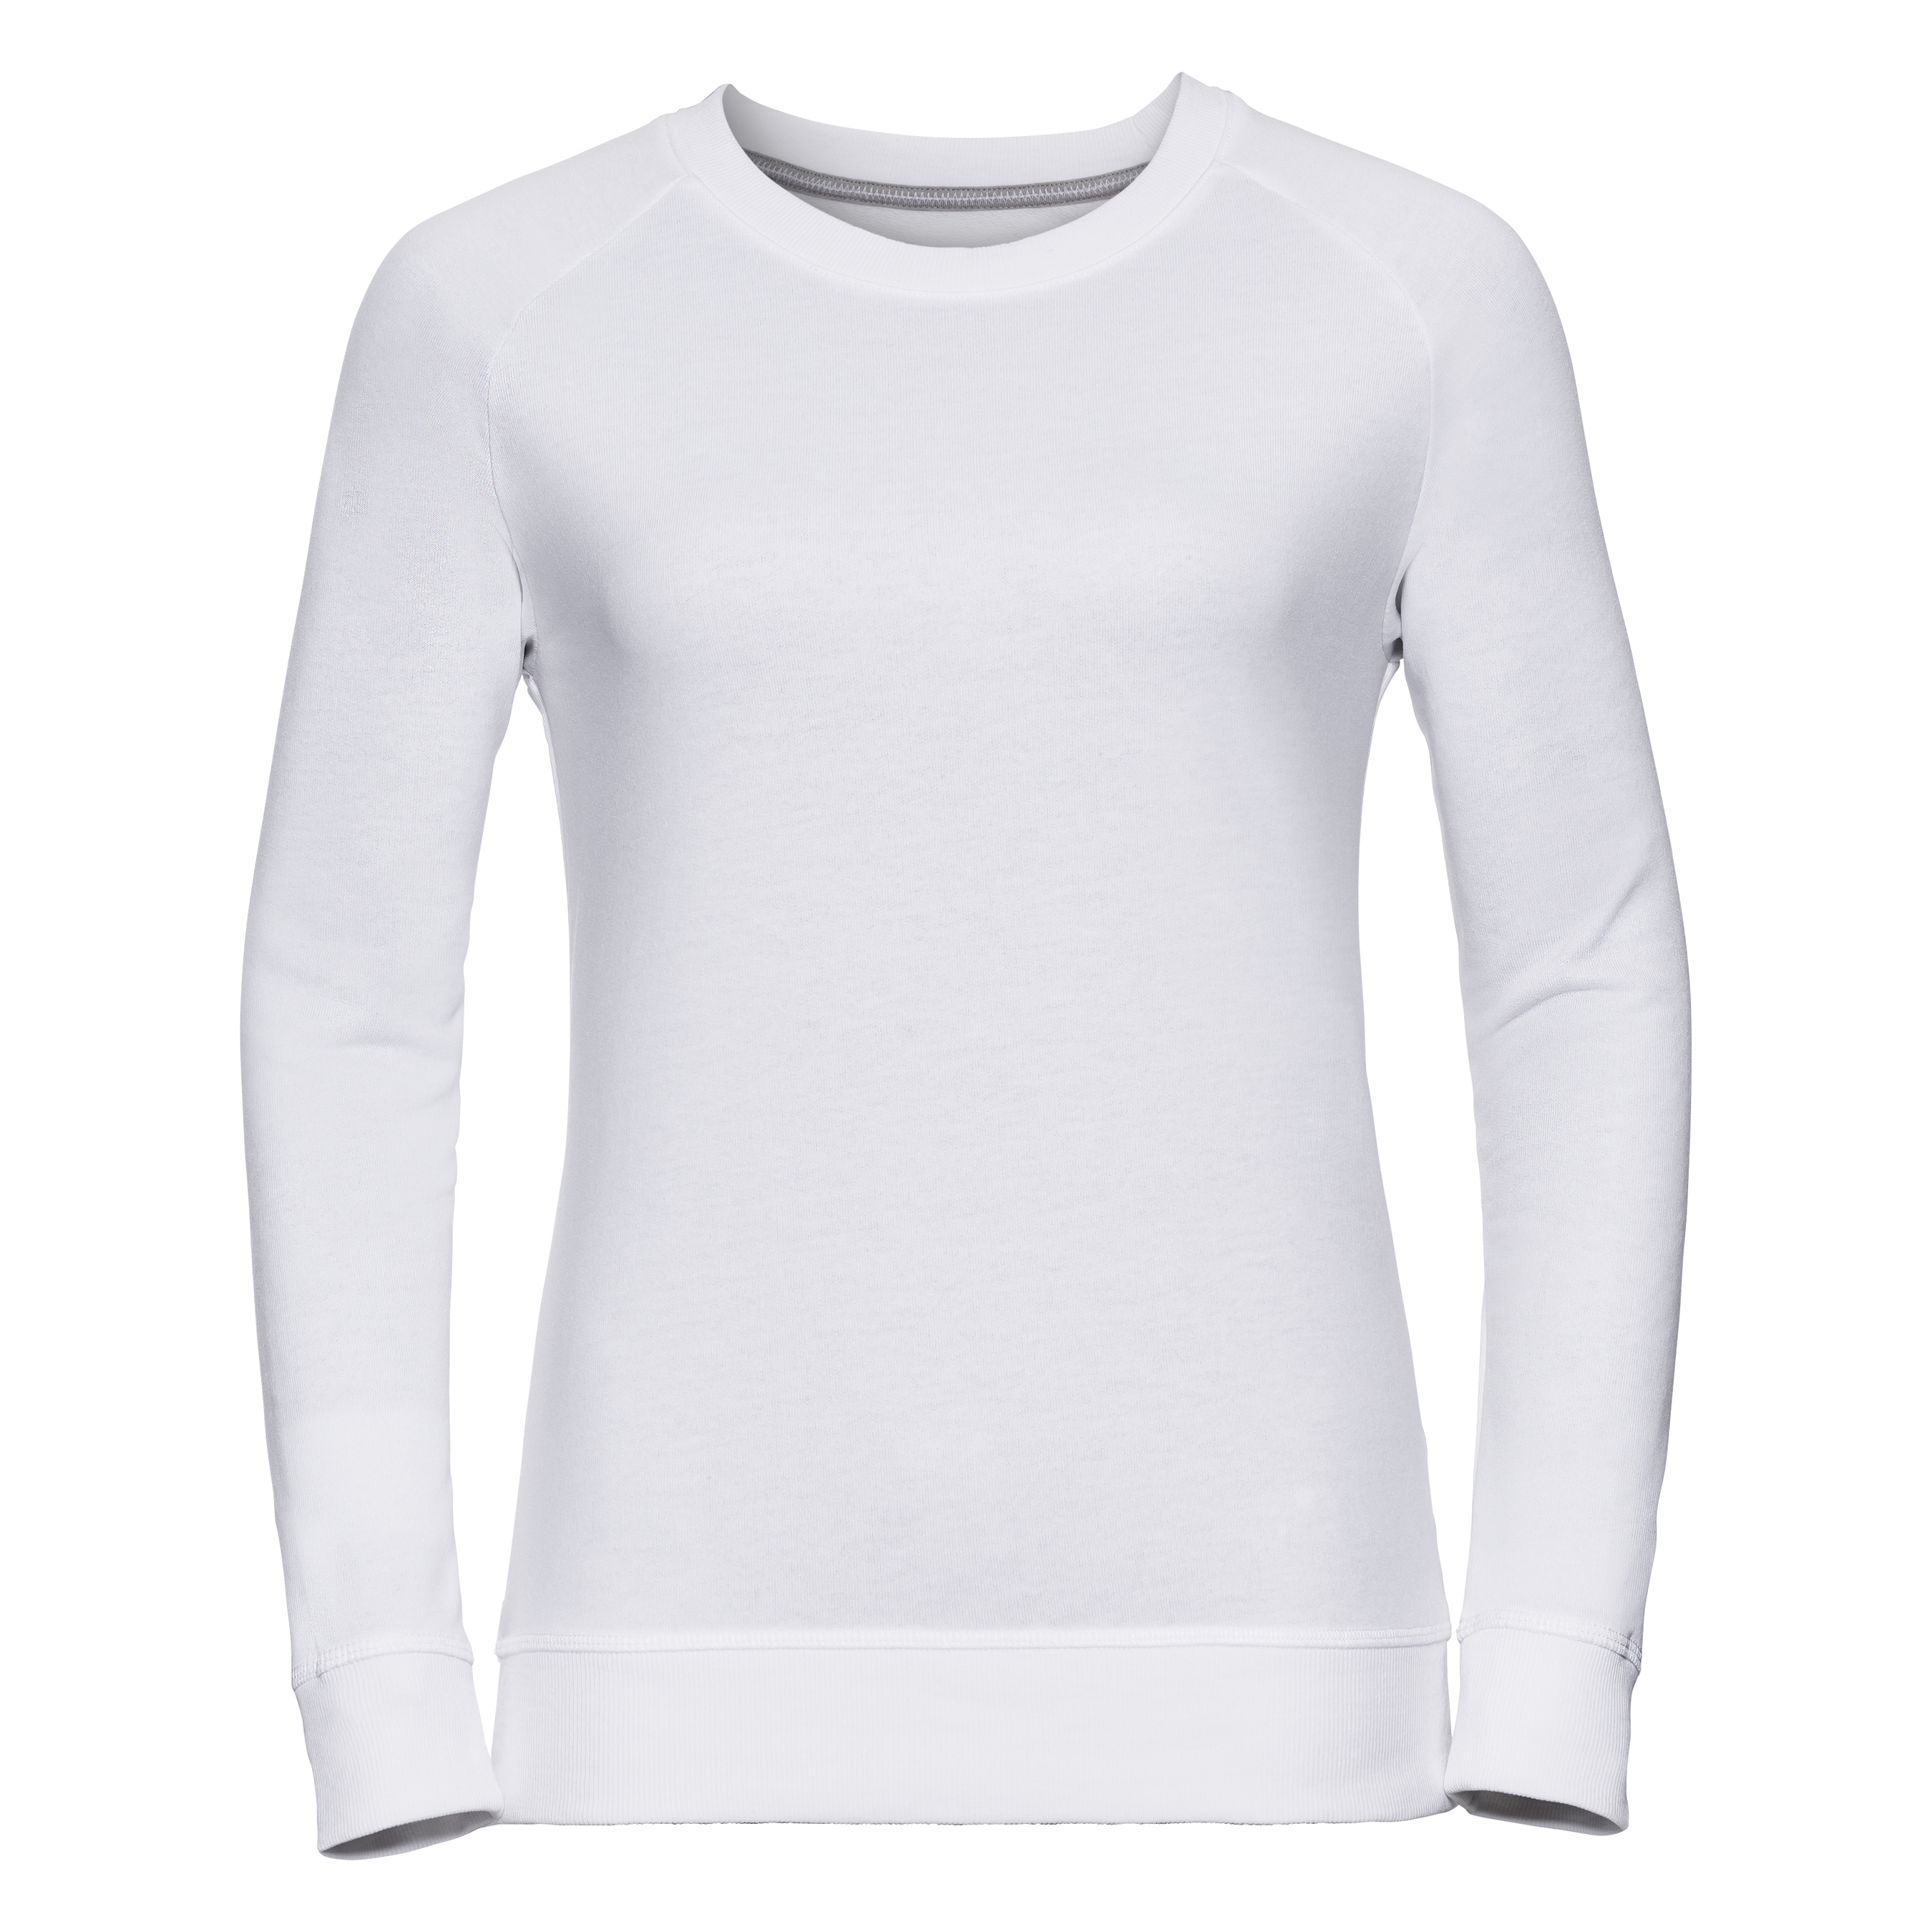 ax-httpswebsystems.s3.amazonaws.comtmp_for_downloadrussell-womens-hd-raglan-sweatshirt-white.jpg